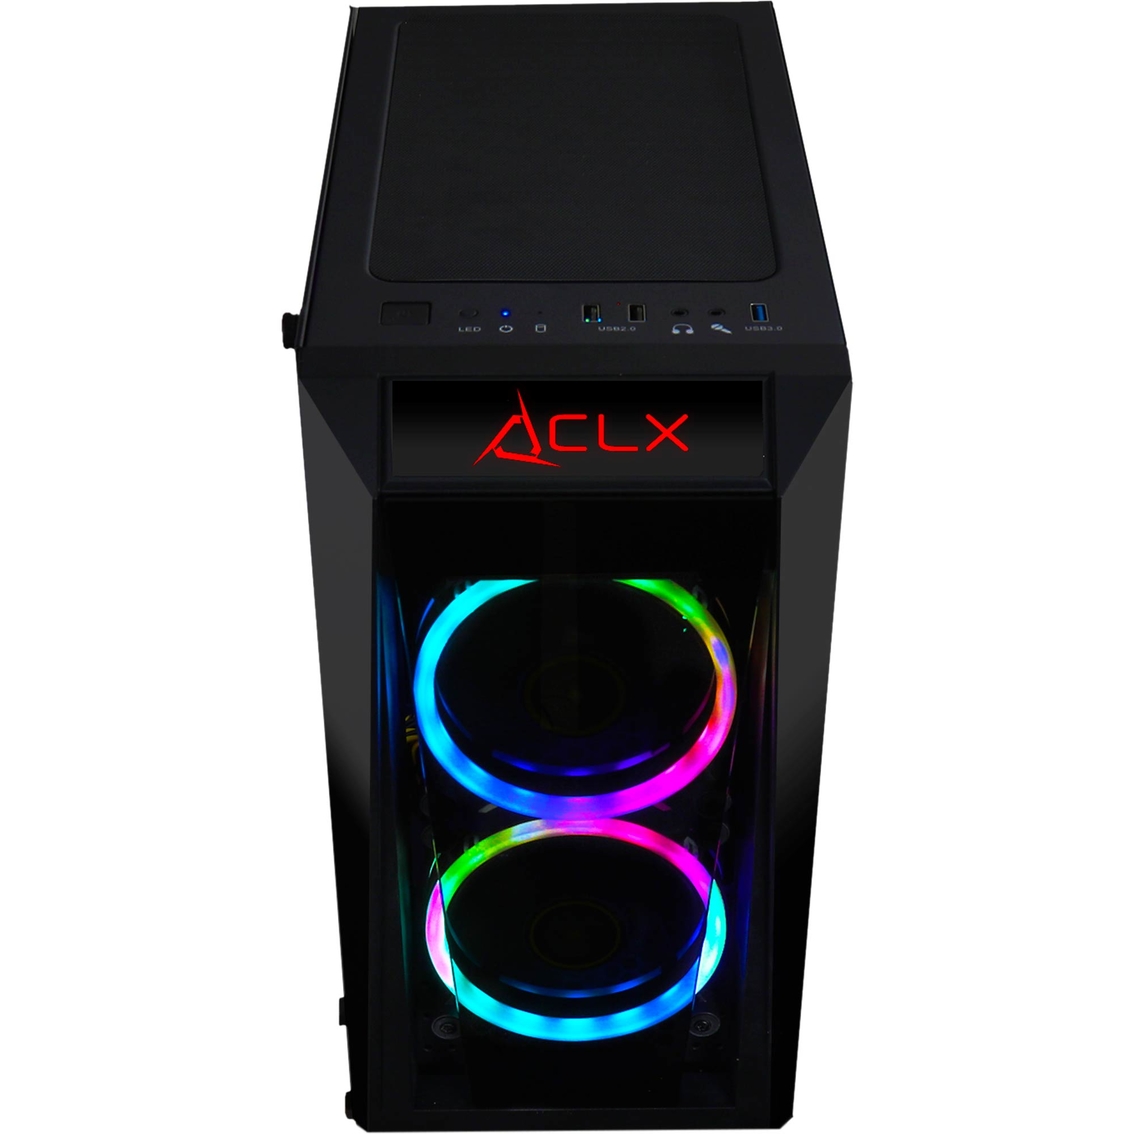 CLX SET VR-Ready AMD Ryzen 7 3.9GHz 16GB RAM 960GB SSD Gaming Desktop - Image 4 of 7